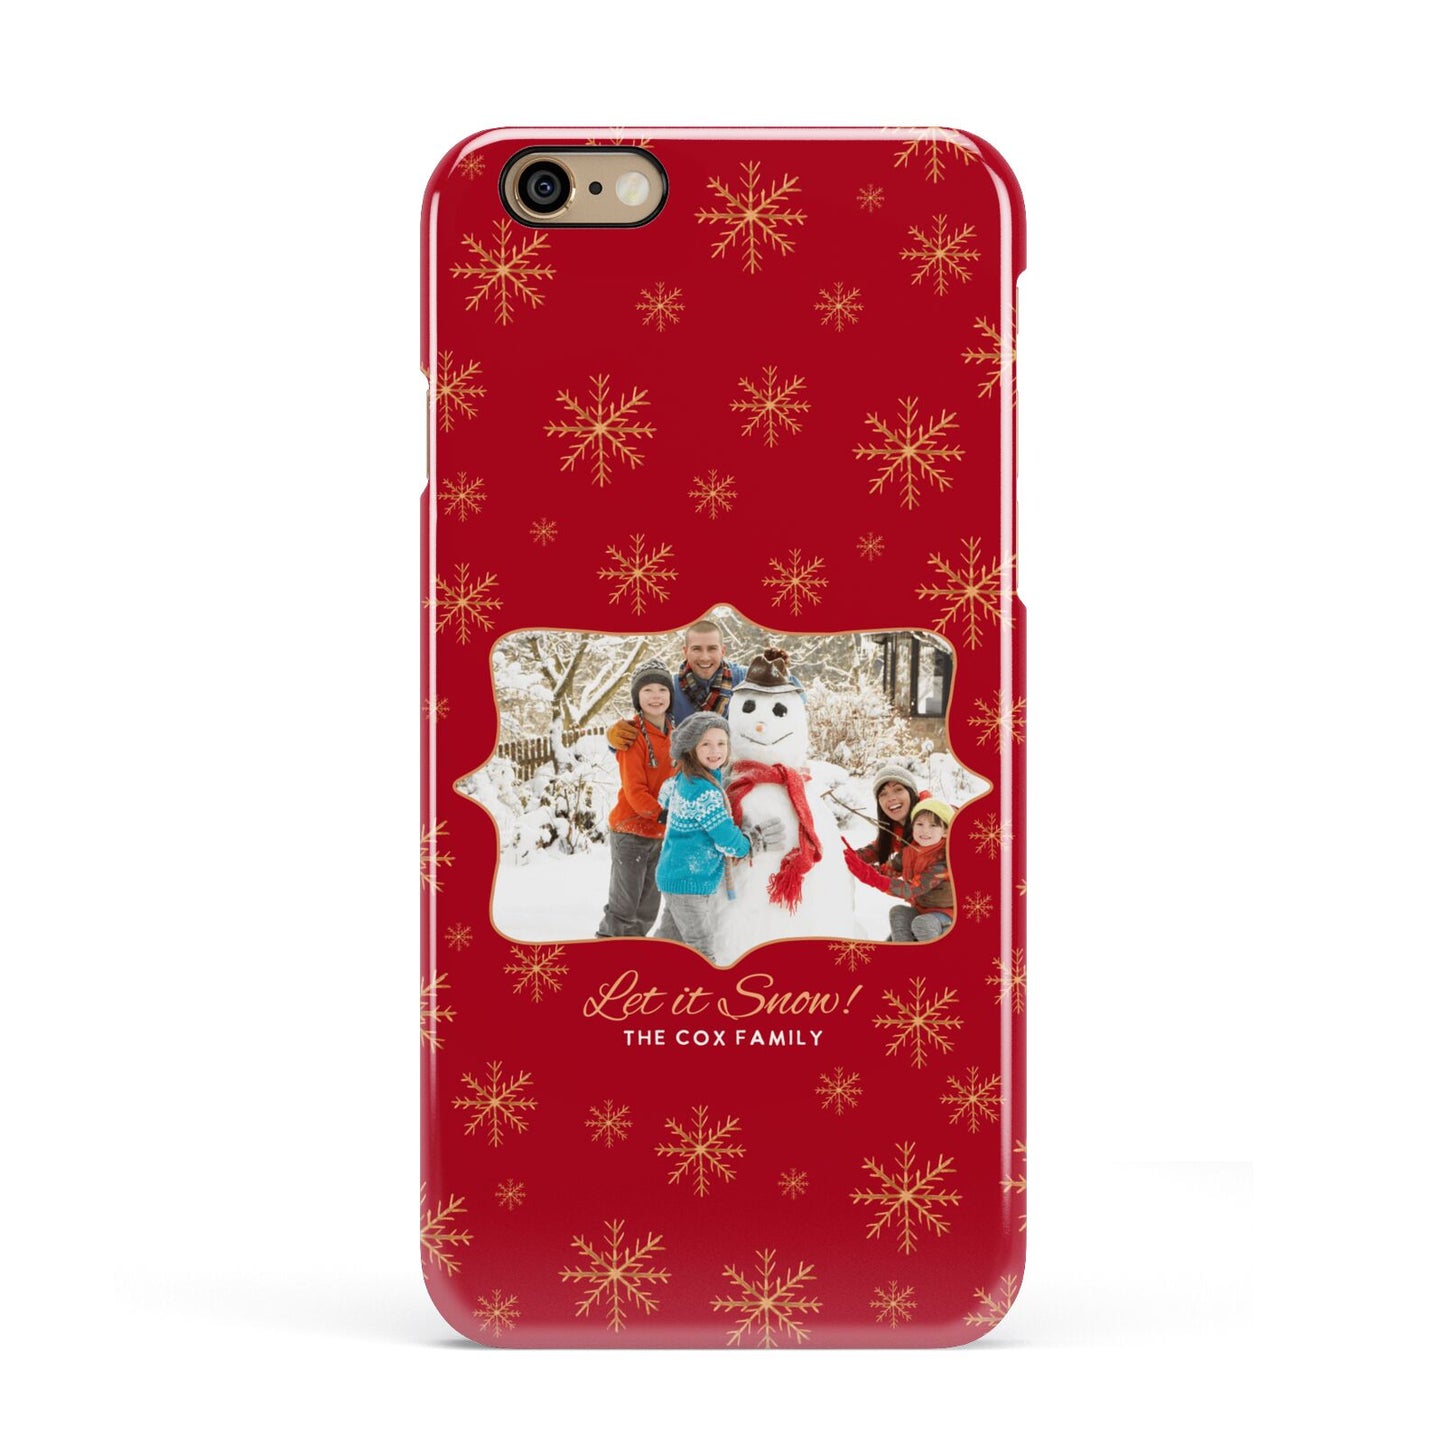 Let it Snow Christmas Photo Upload Apple iPhone 6 3D Snap Case